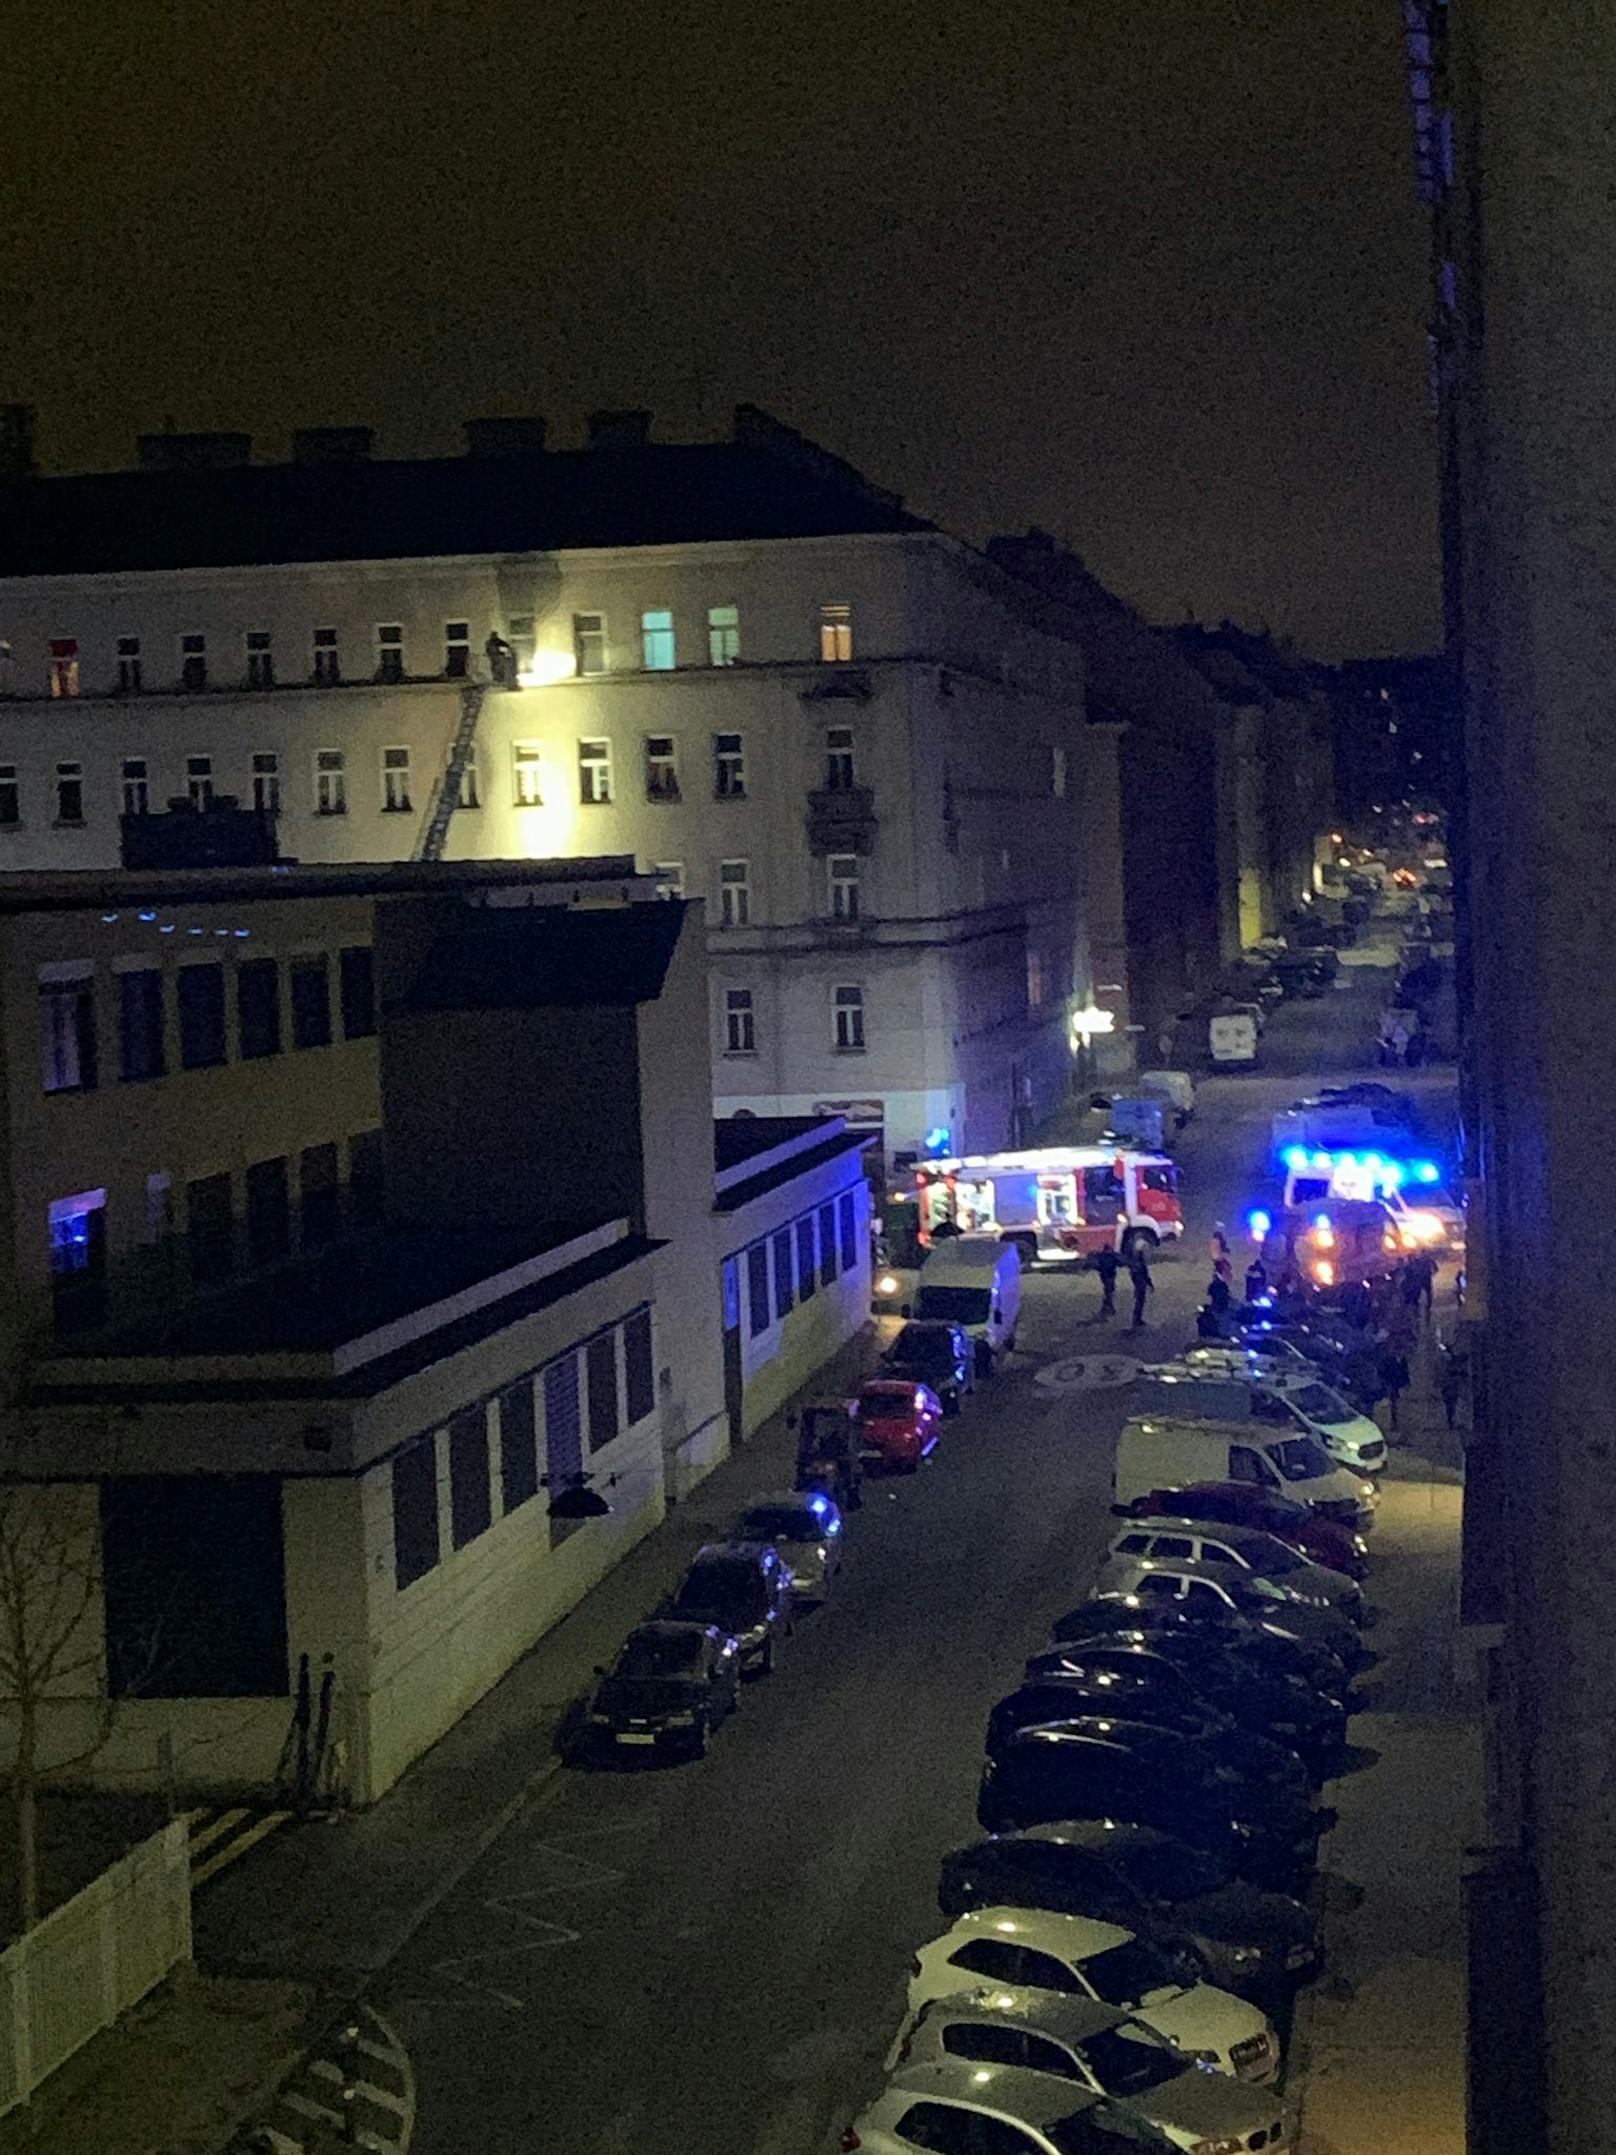 Feuer-Alarm am Montagabend in Wien-Favoriten!